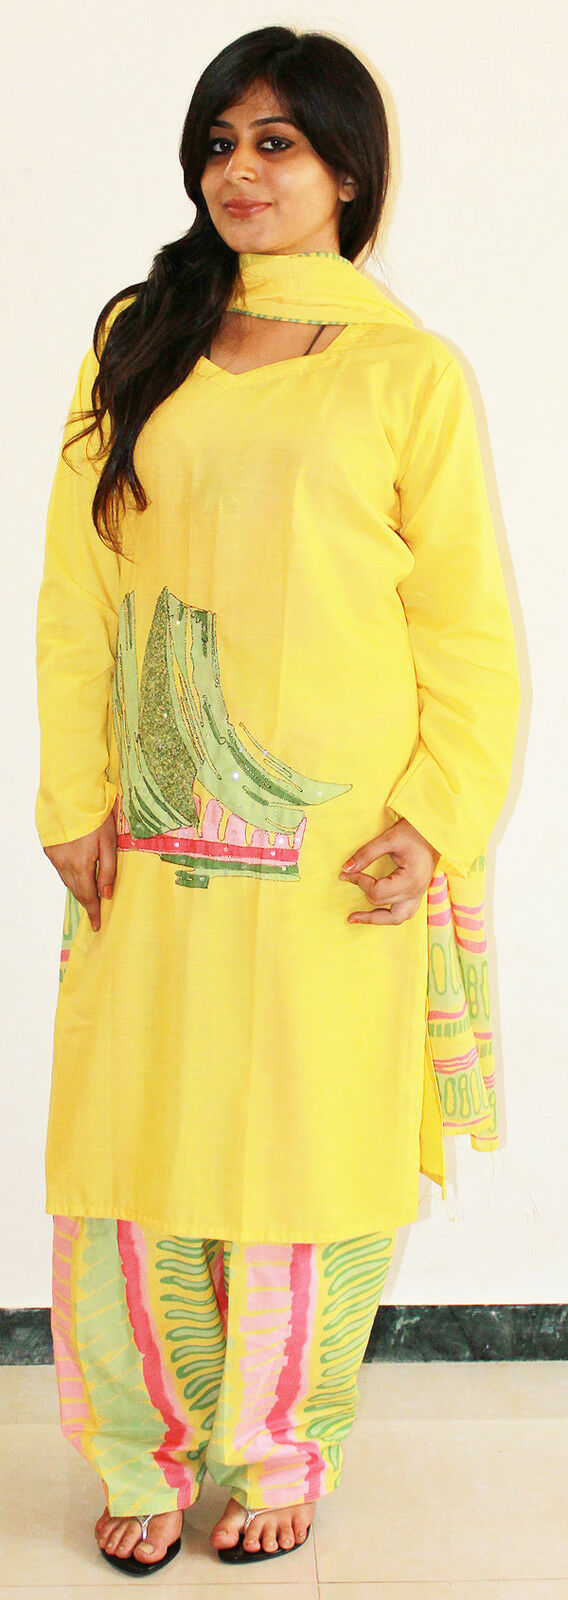 Yellow Exclusive Designer salwar kameez party wear Cotton suit sz 44 Indian